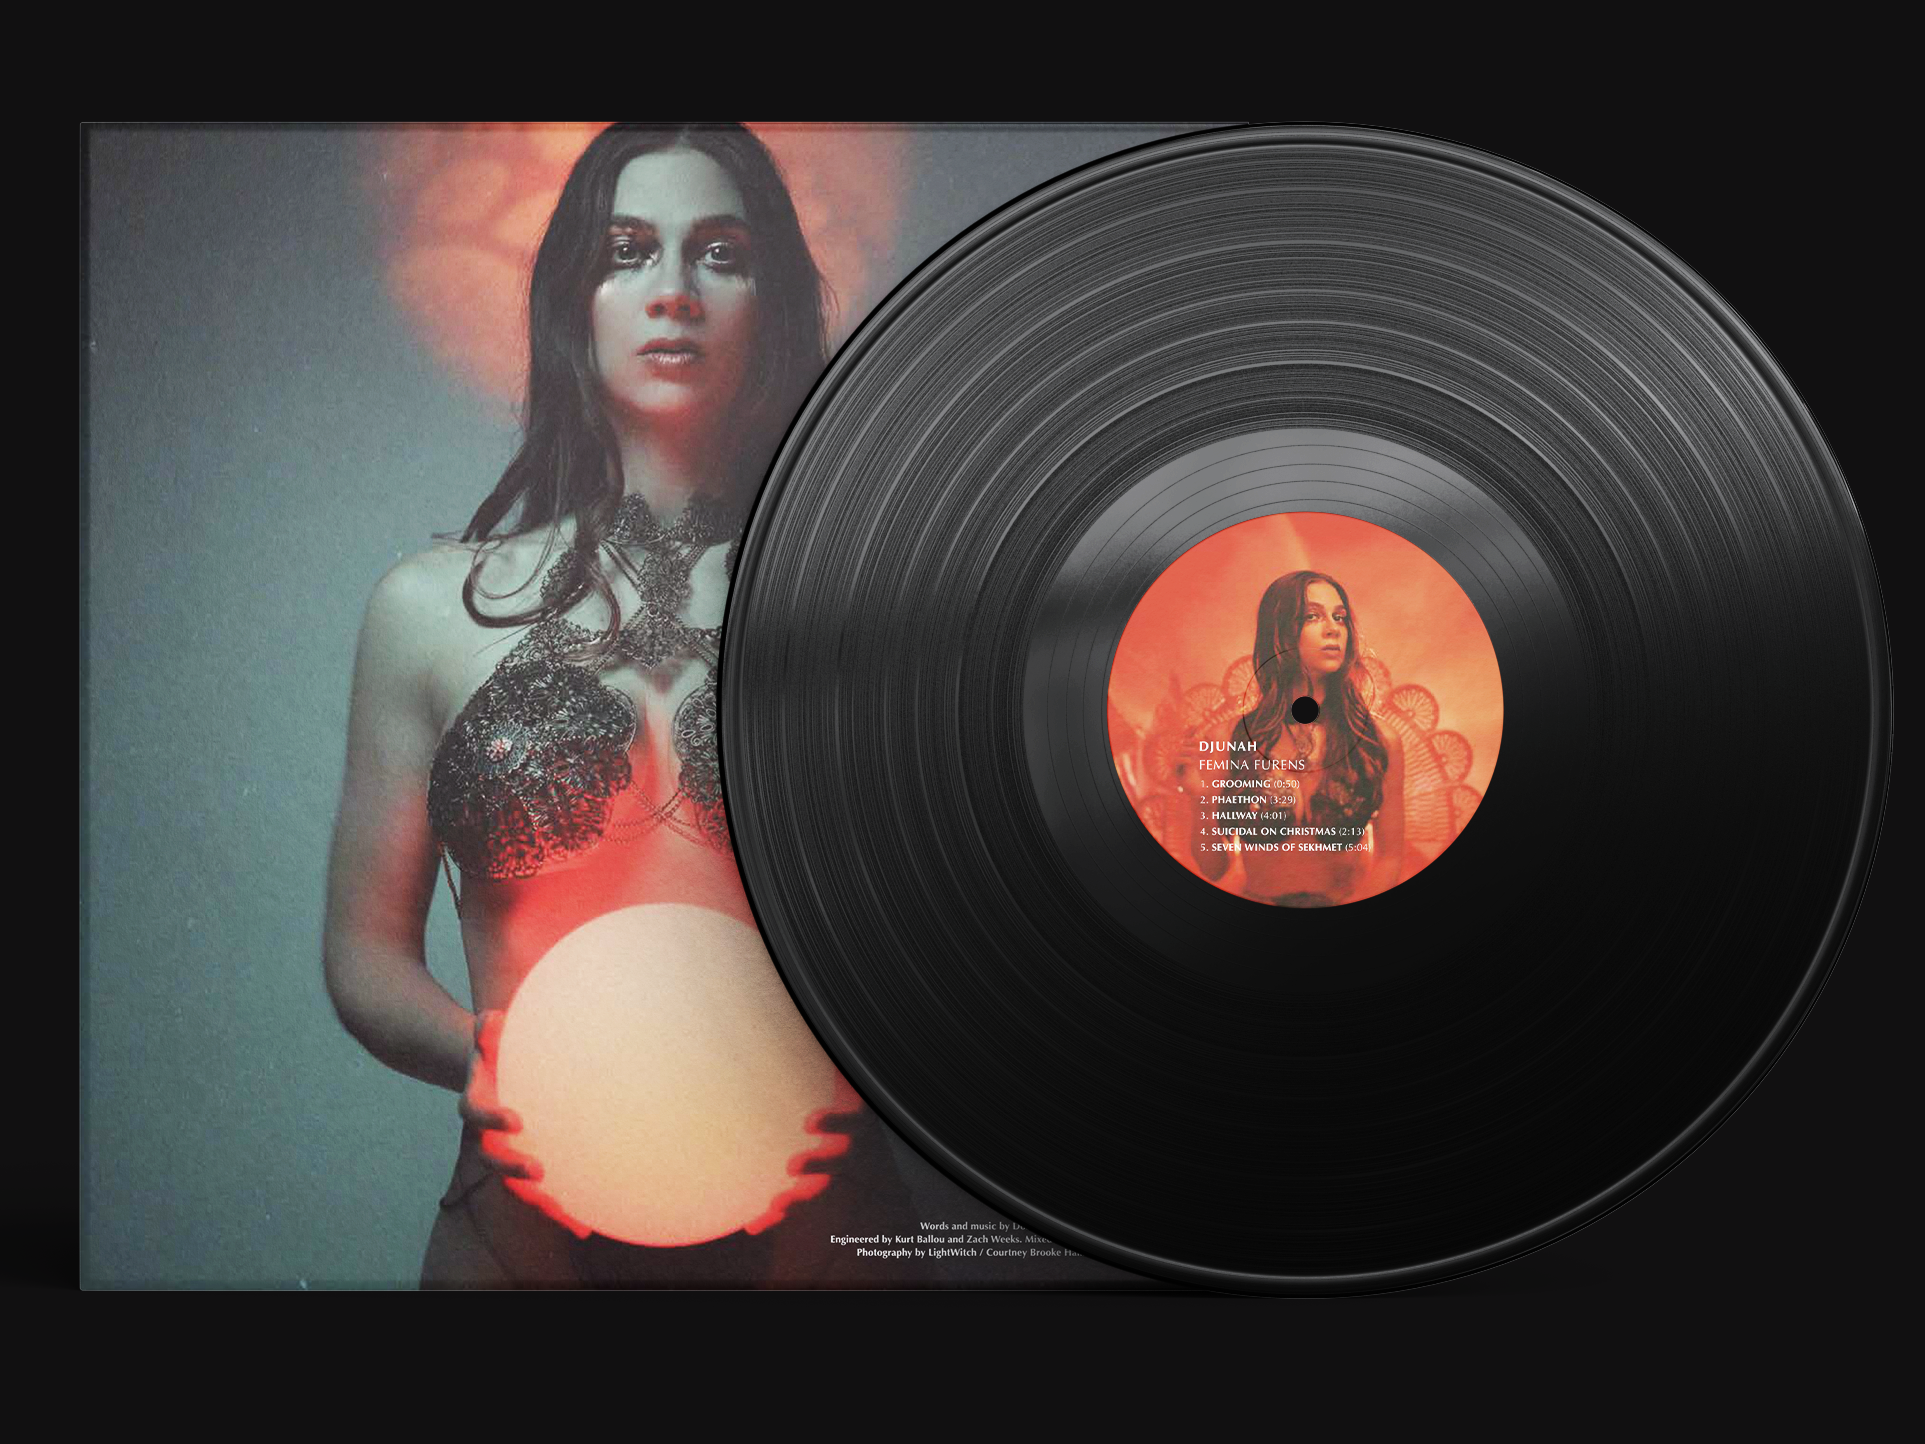 Djunah "Femina Furens" black 12" vinyl LP, reverse cover, pressed by Smashed Plastic in Chicago, Illinois